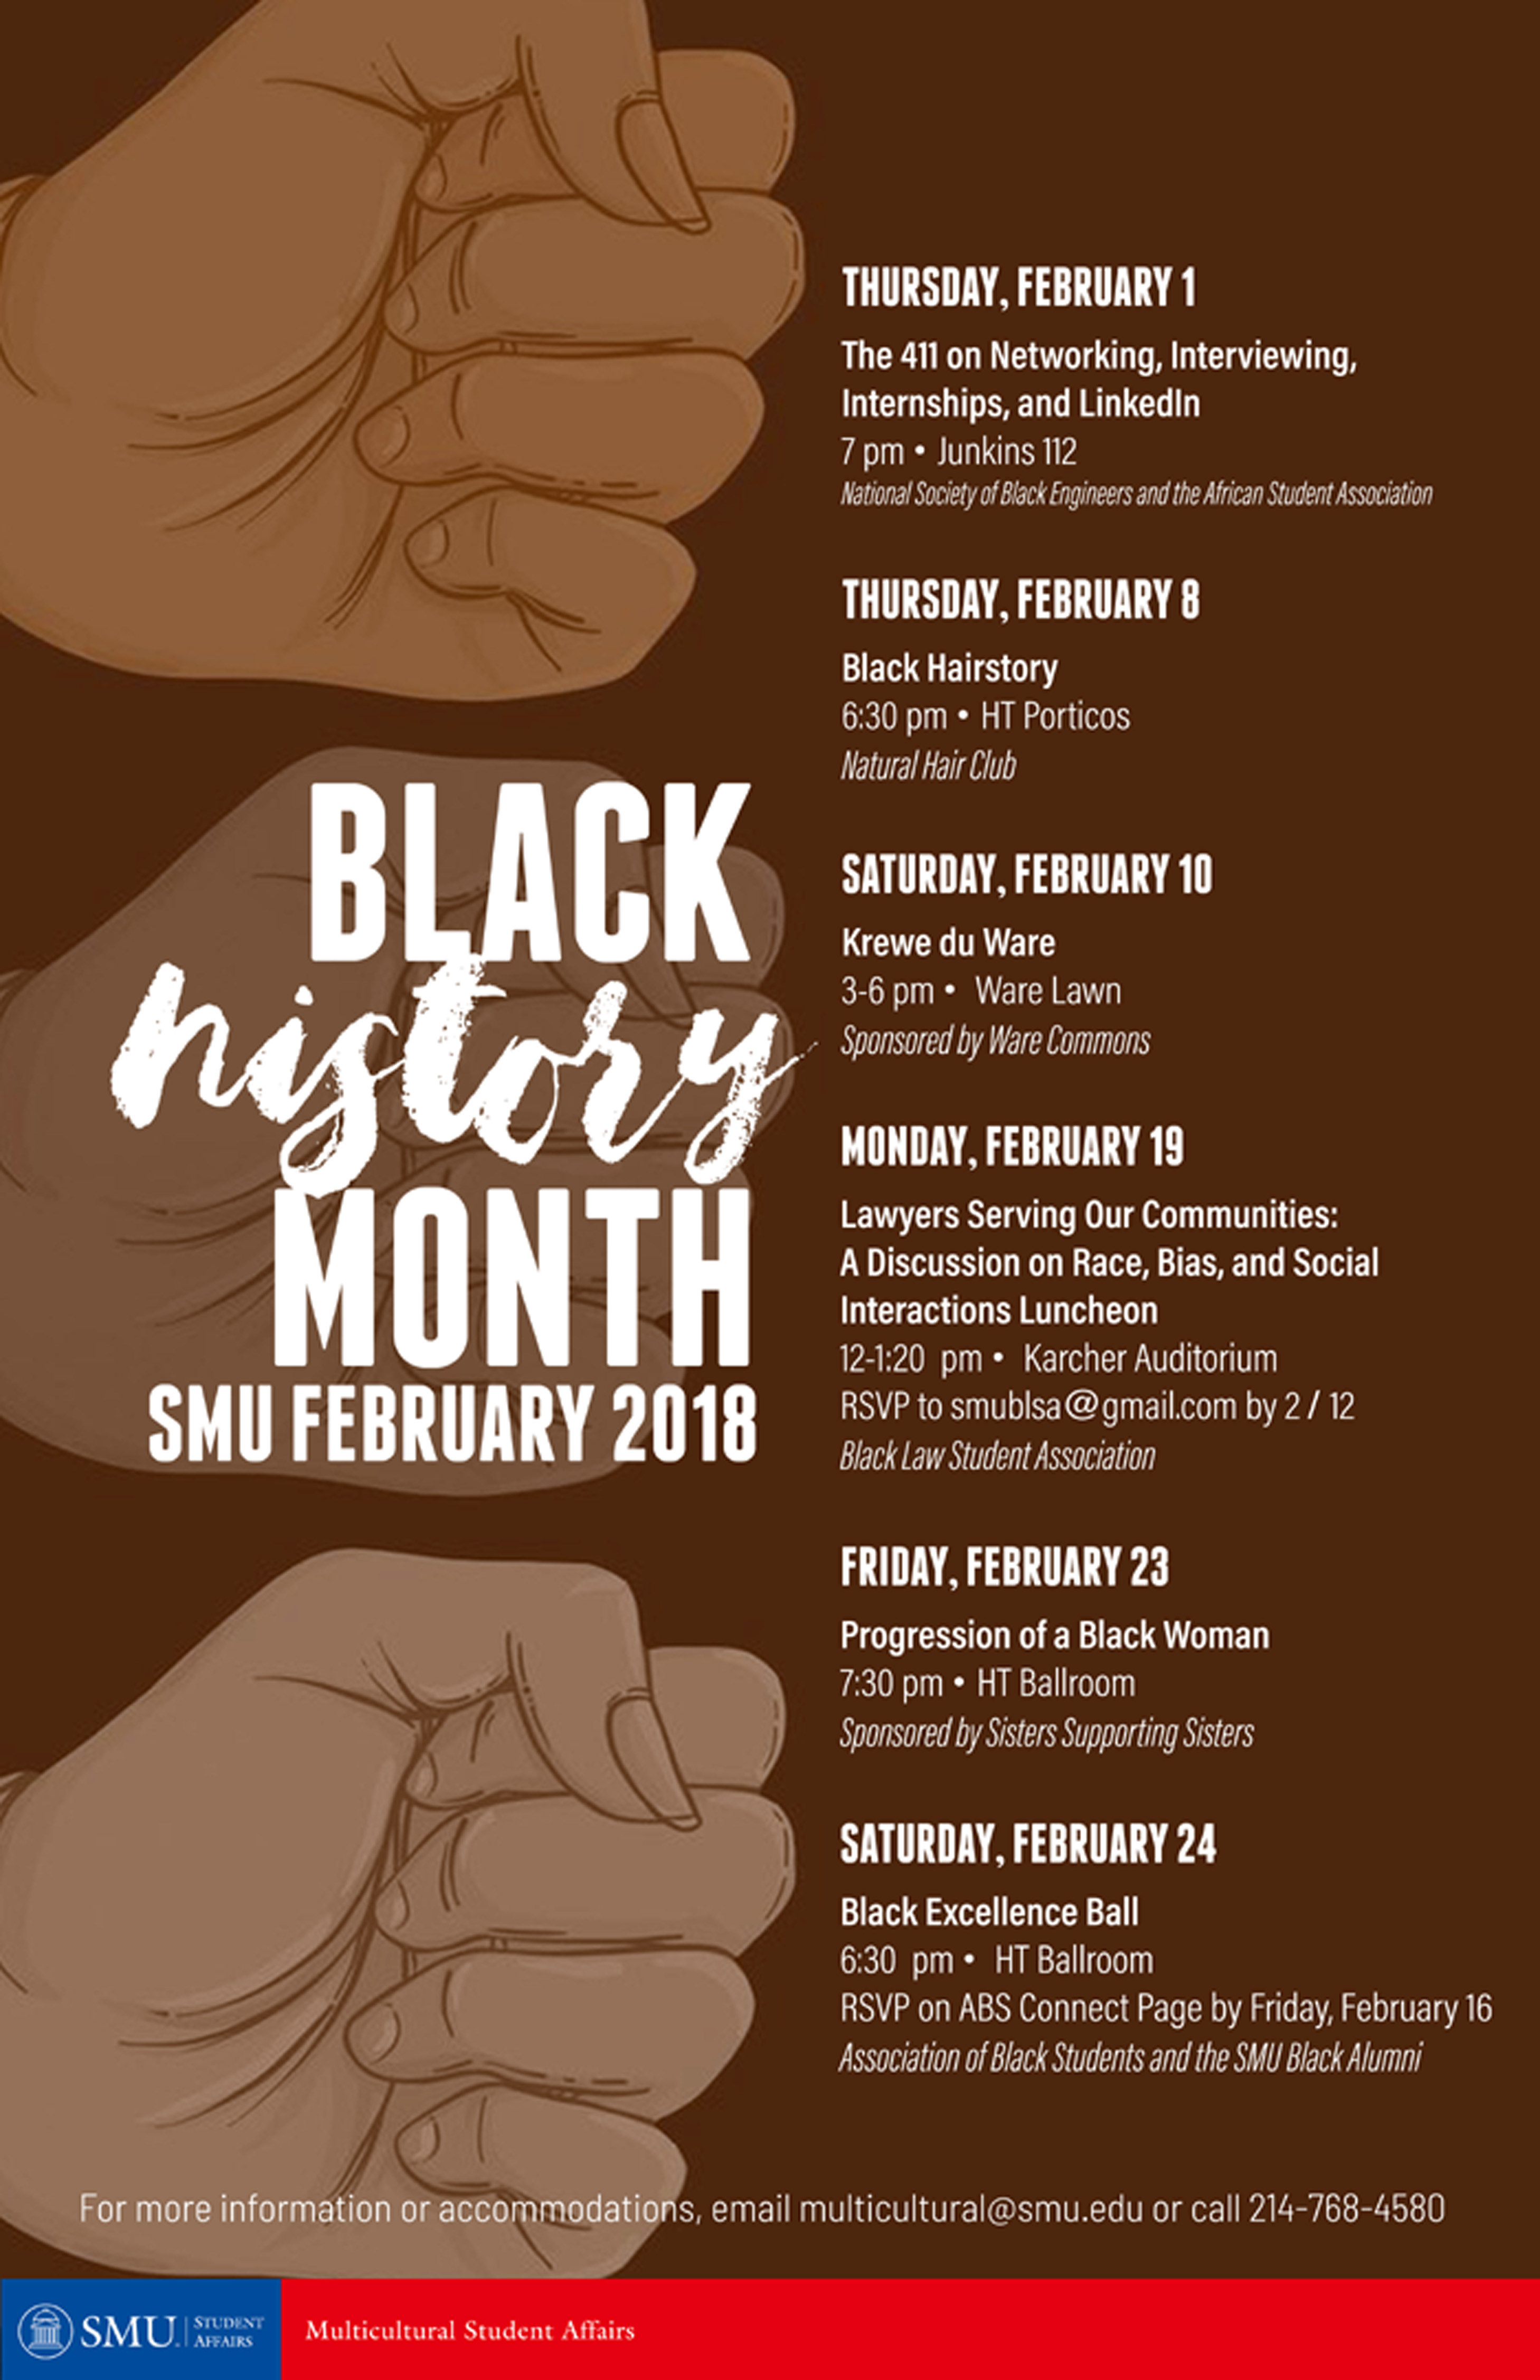 Black History Month at SMU